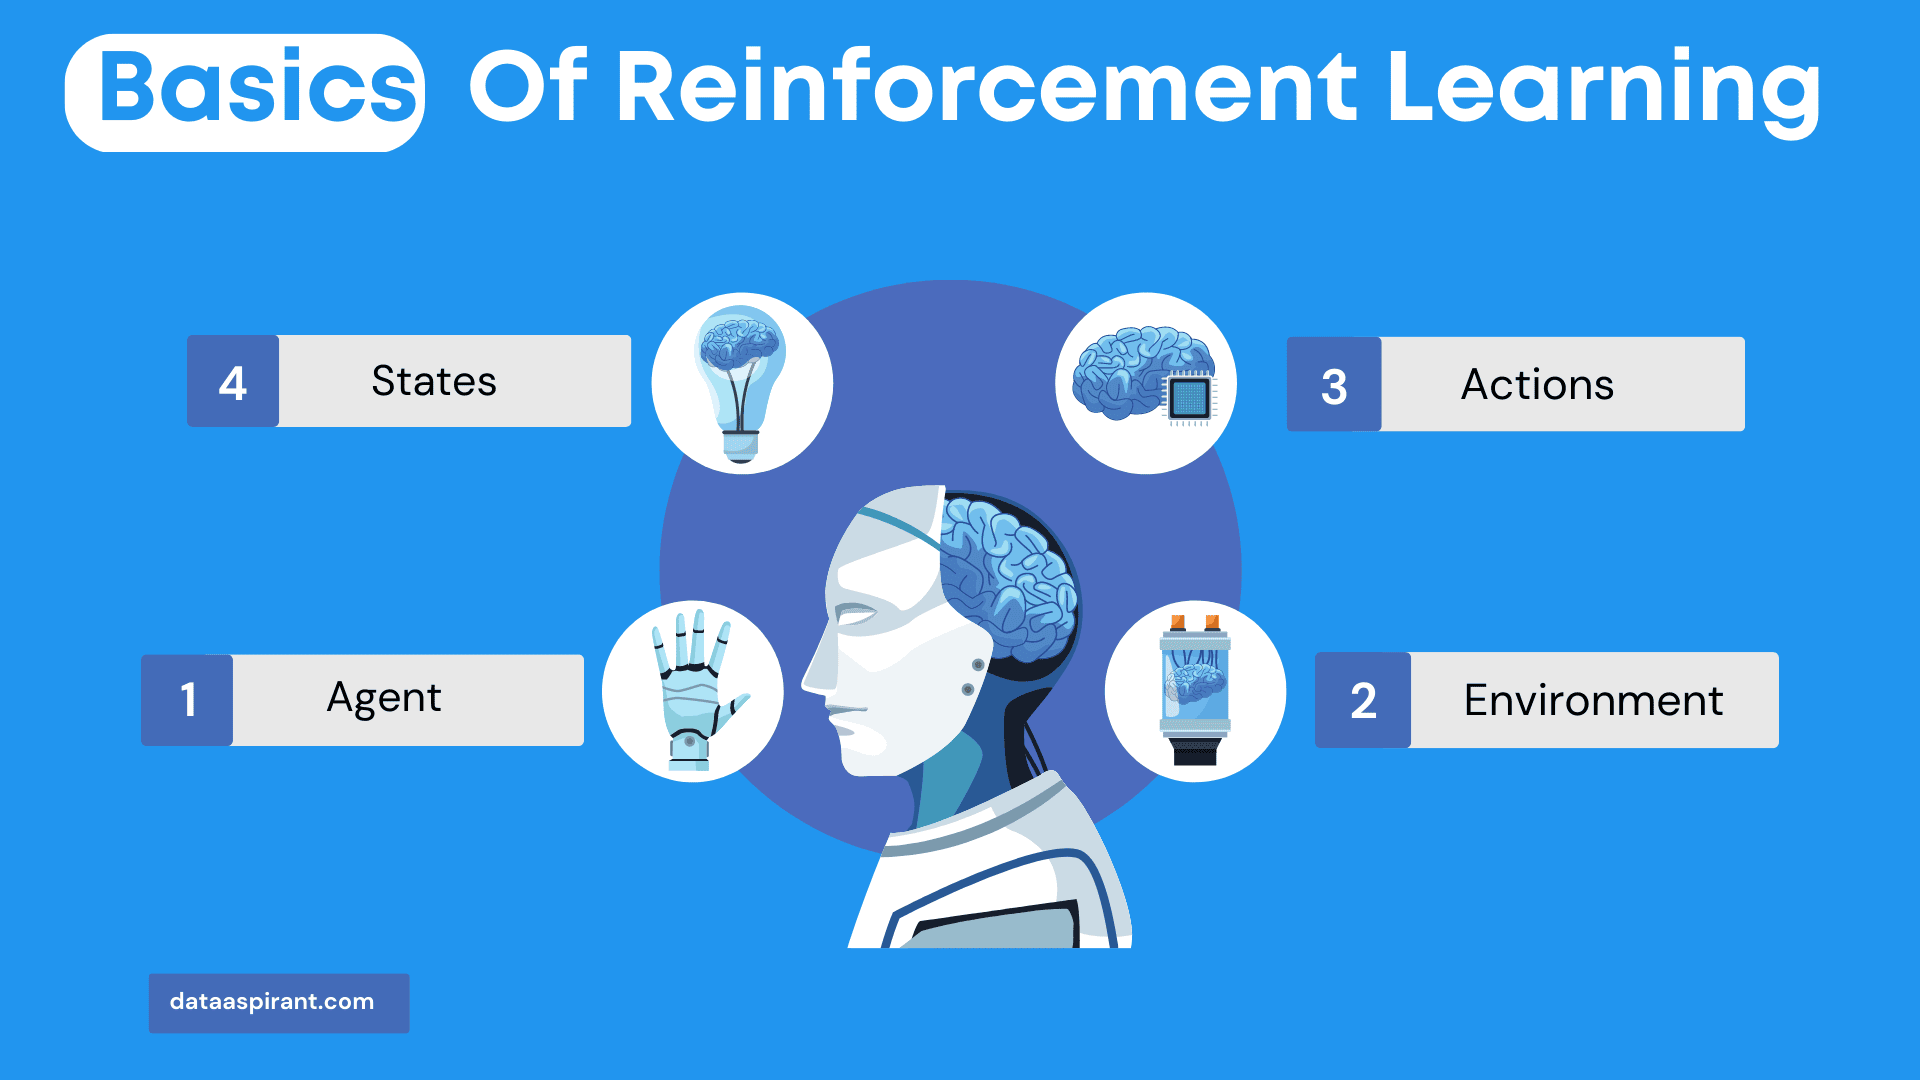 Basics of Reinforcement Learning